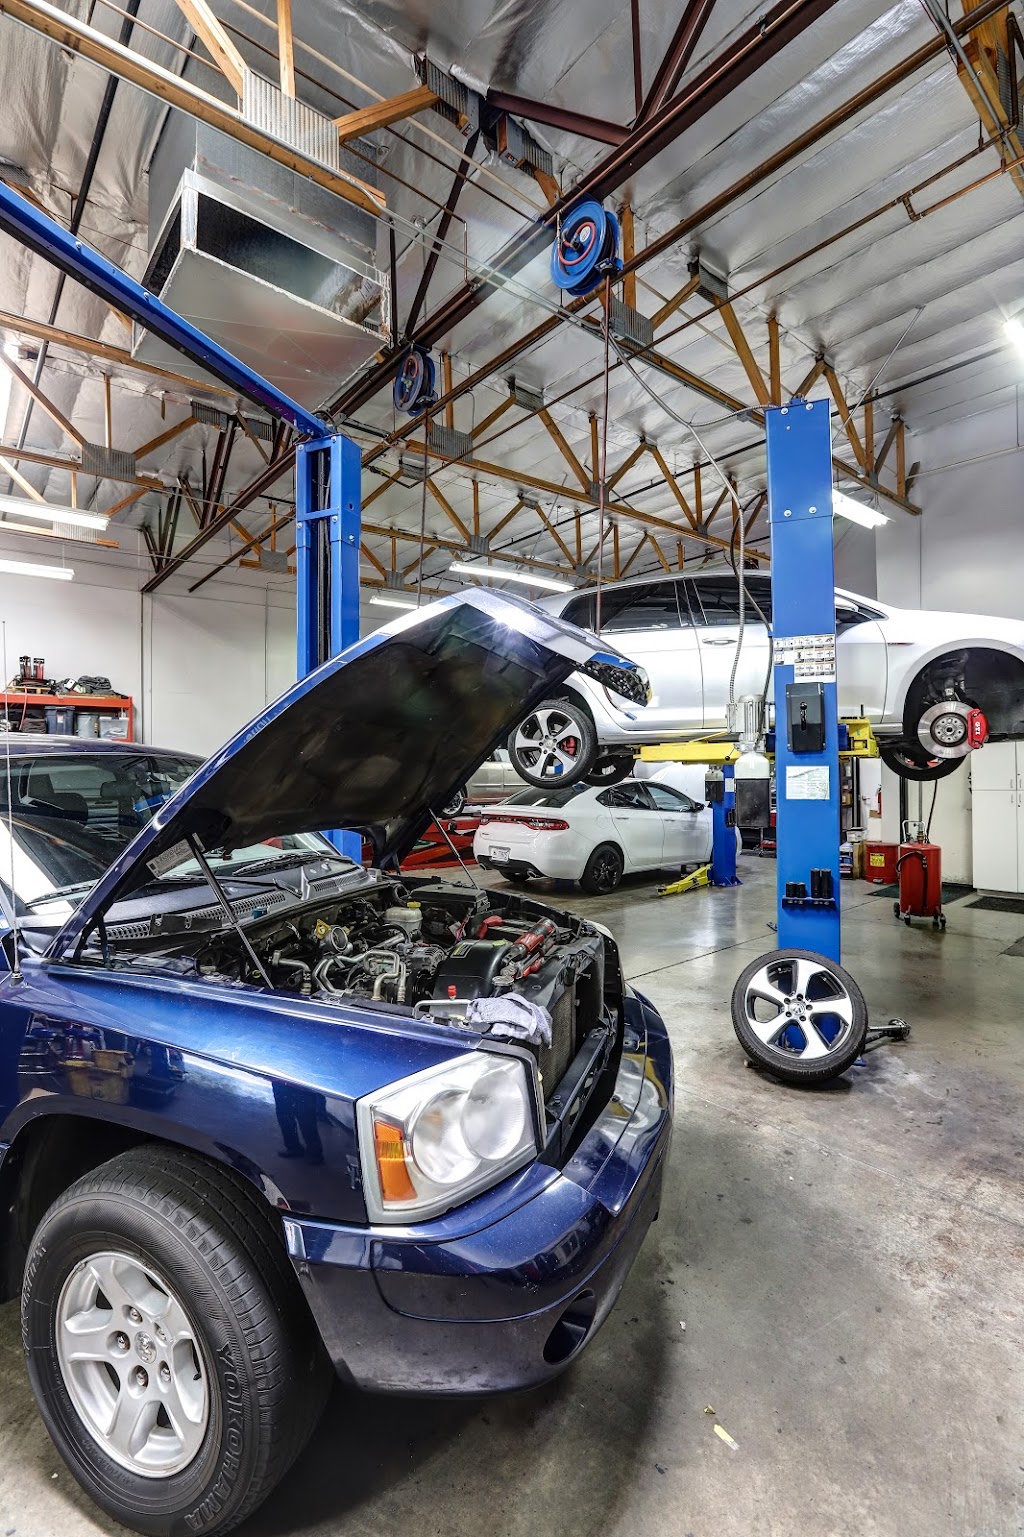 Kens Auto Repair Service | 8615 W Kelton Ln #303, Peoria, AZ 85382, USA | Phone: (623) 466-6781